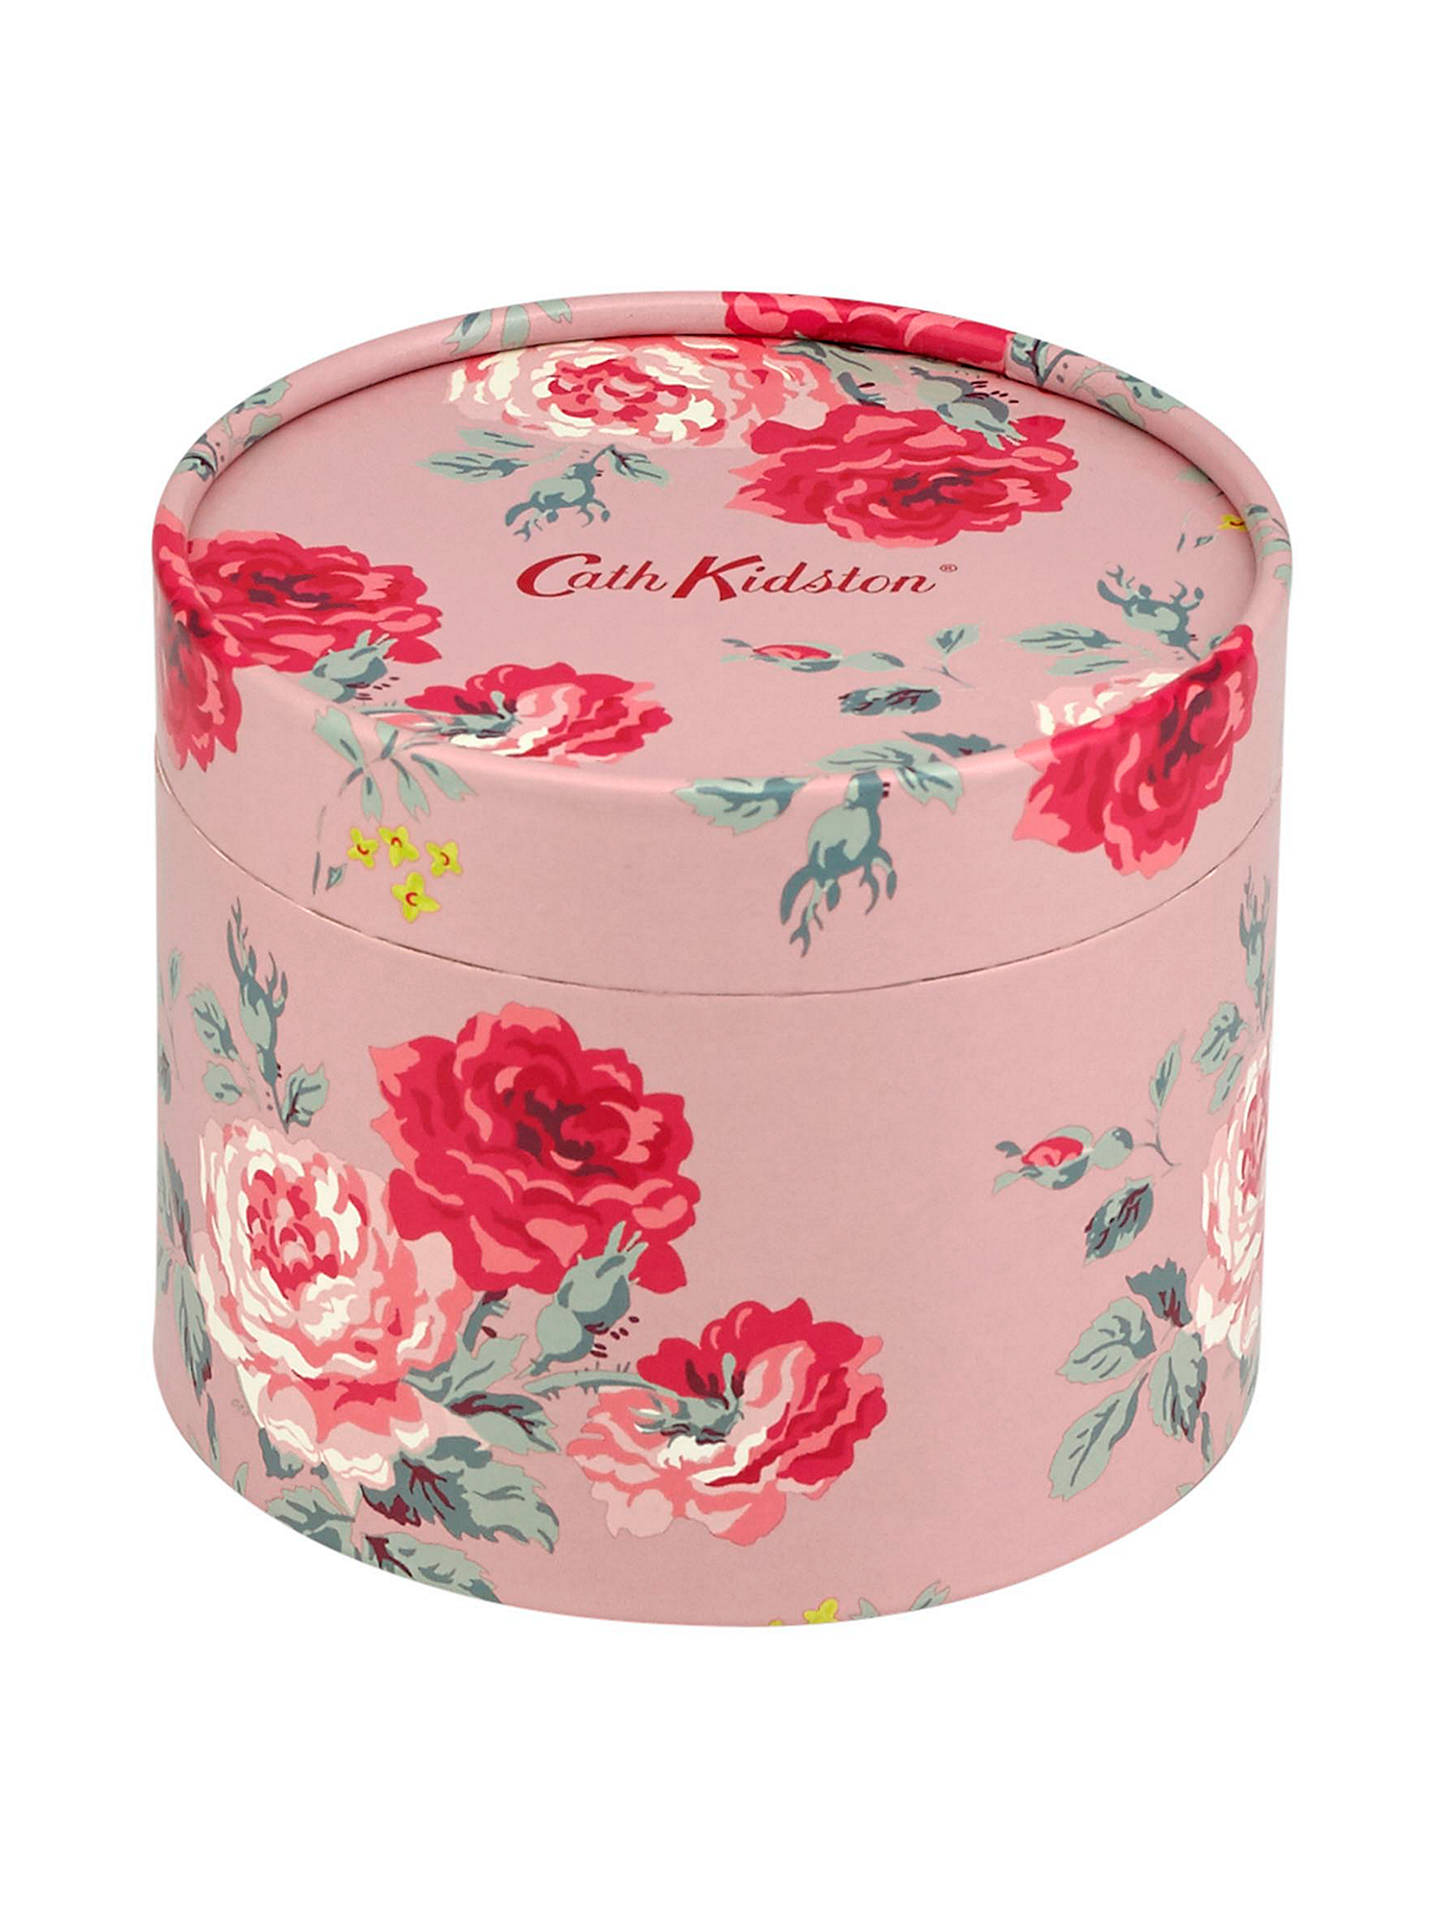 Cath Kidston Antique Rose Mug in Gift Box, Dusty Pink